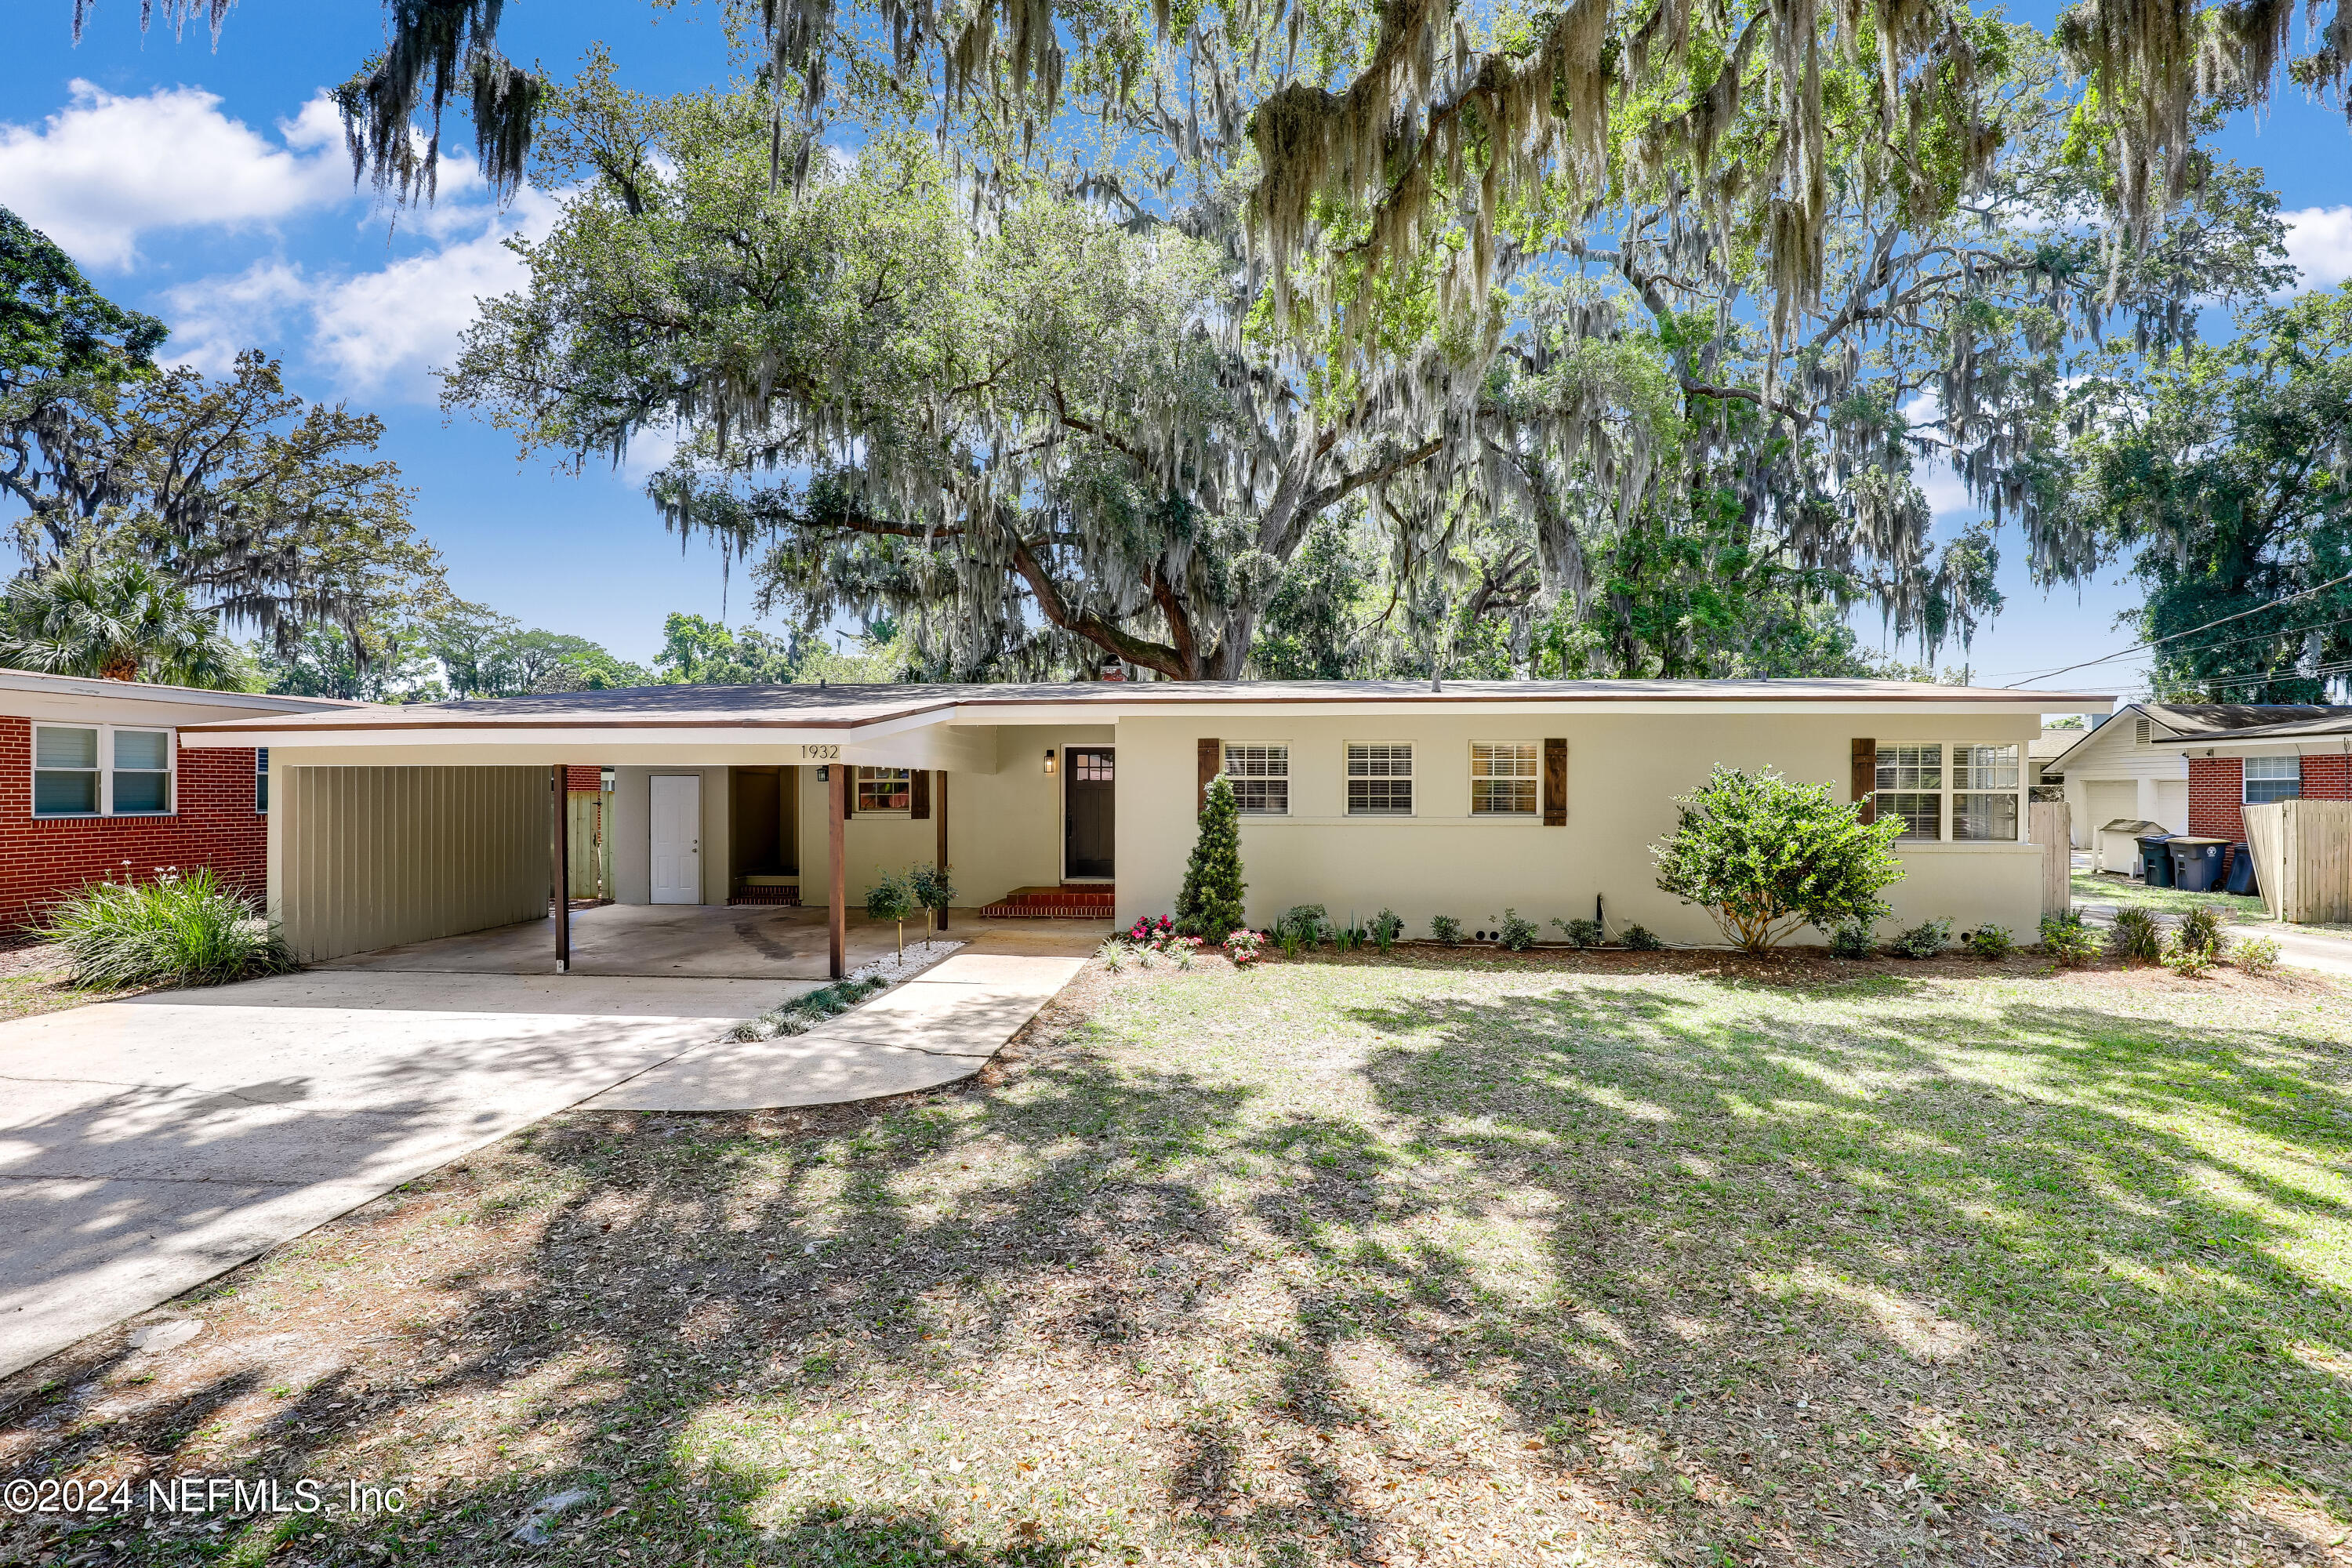 Jacksonville, FL home for sale located at 1932 Sweet Briar Lane, Jacksonville, FL 32217